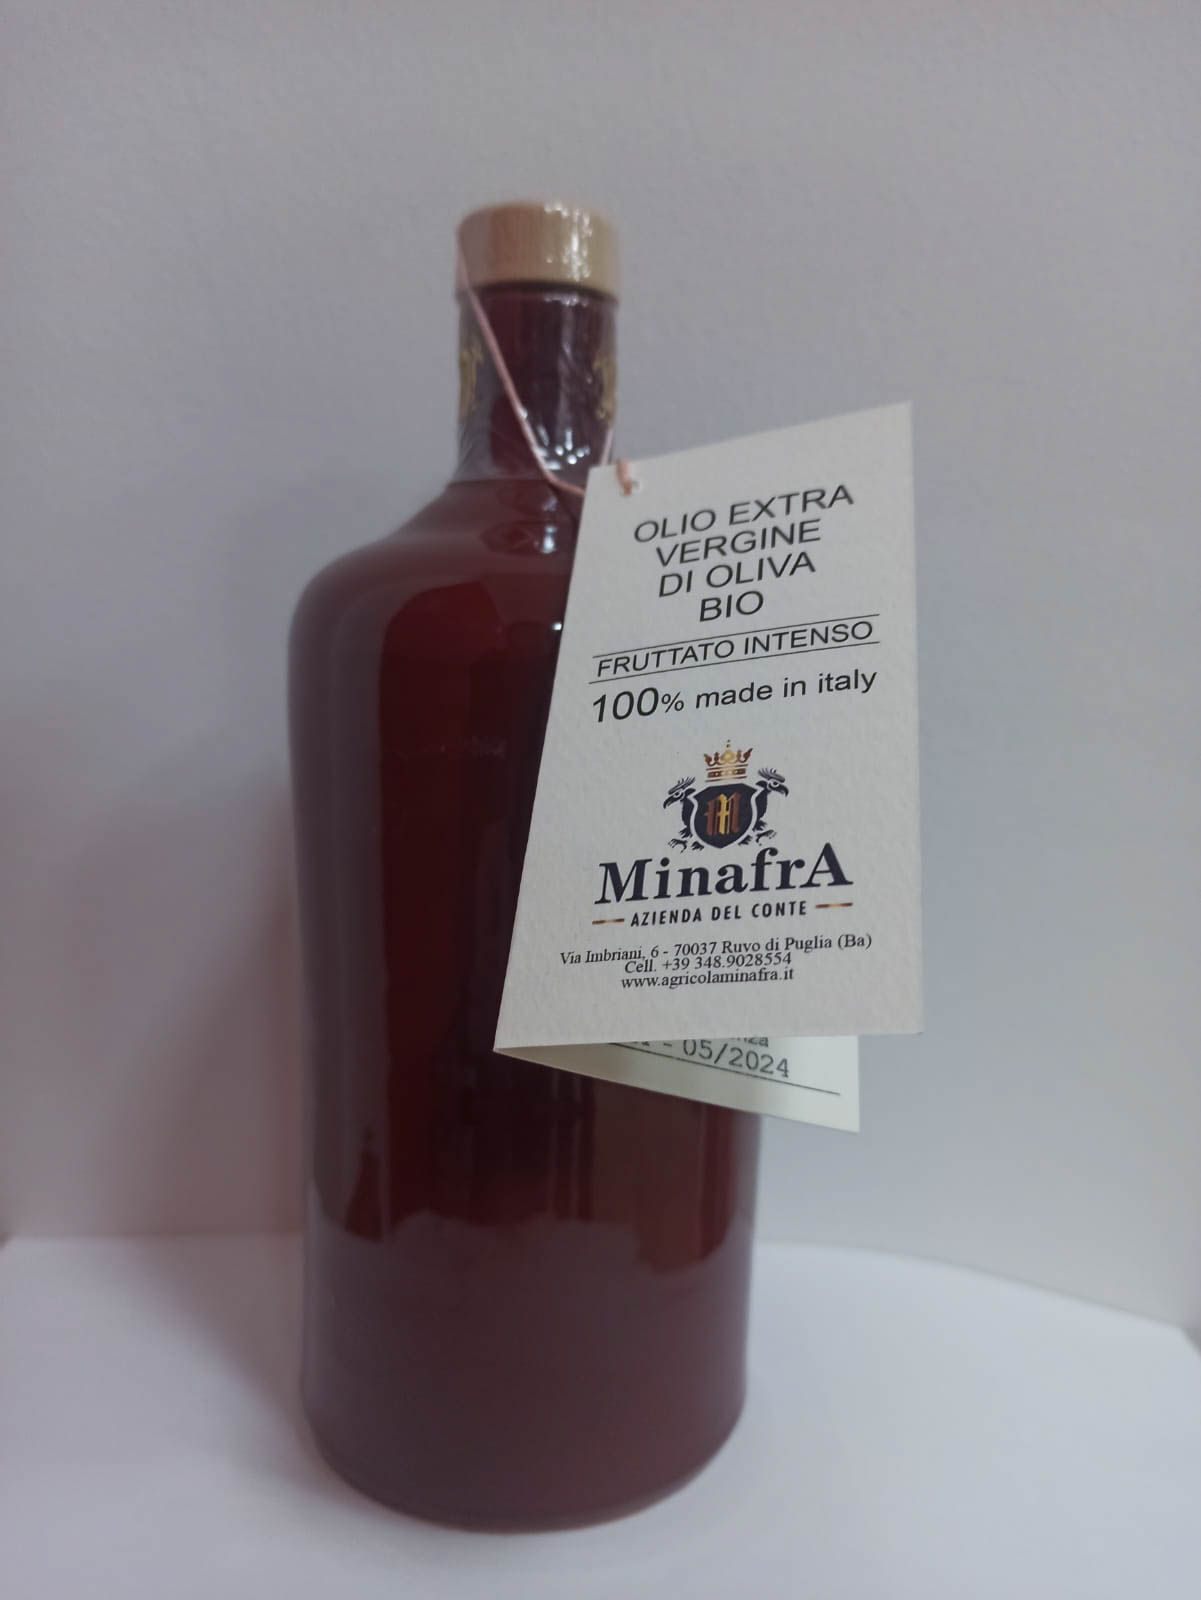 Minafra Olio di Oliva Biologico Extra Vergine Bottiglia in Ceramica Marrone 500ml